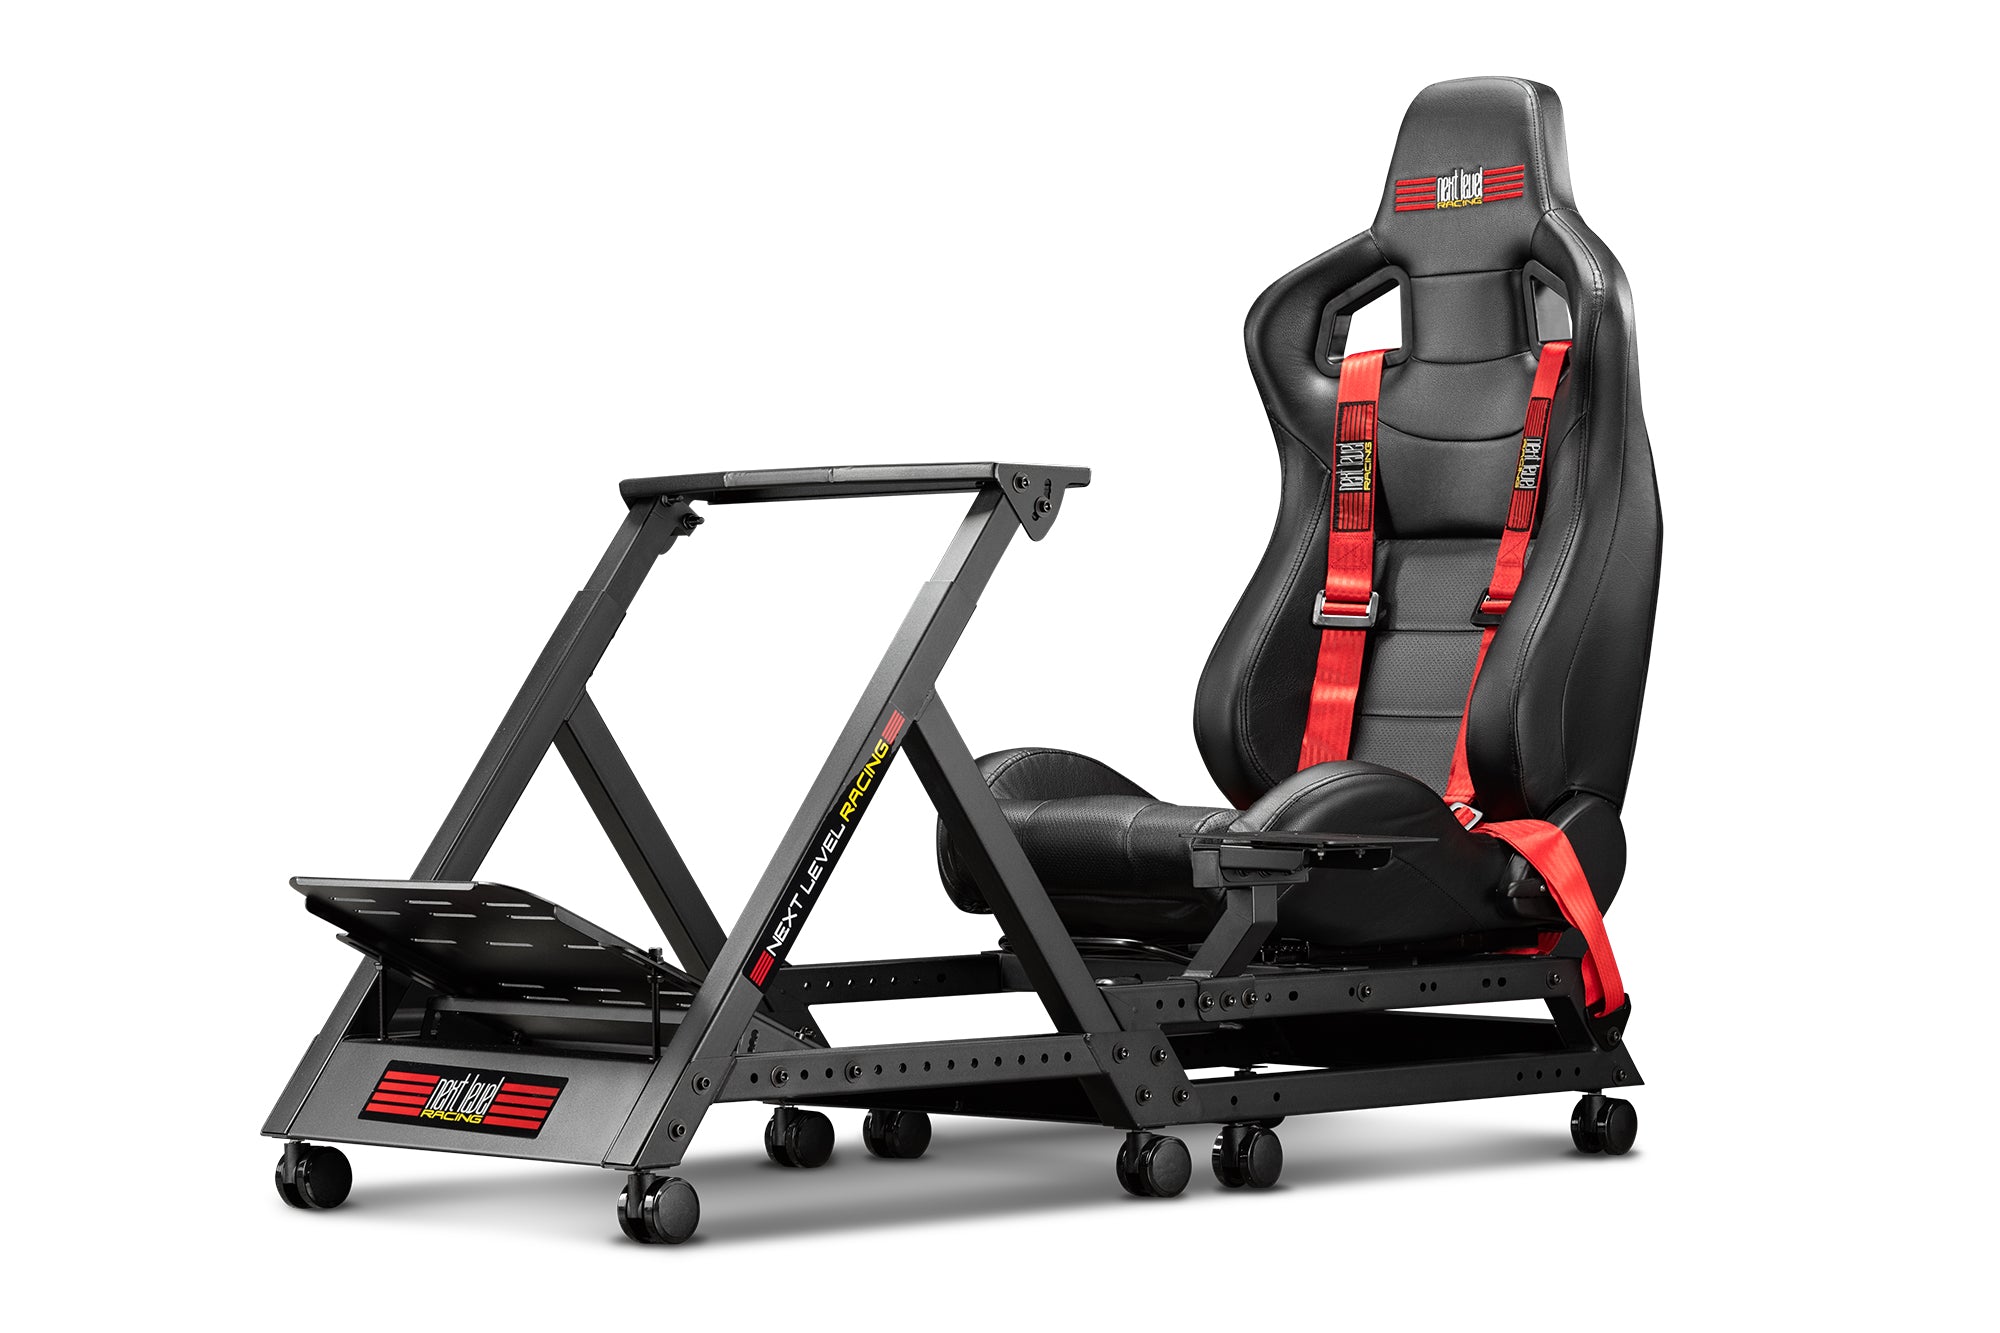 Next Level Racing F-GT Simulator Cockpit Black NLR-S010 - Best Buy